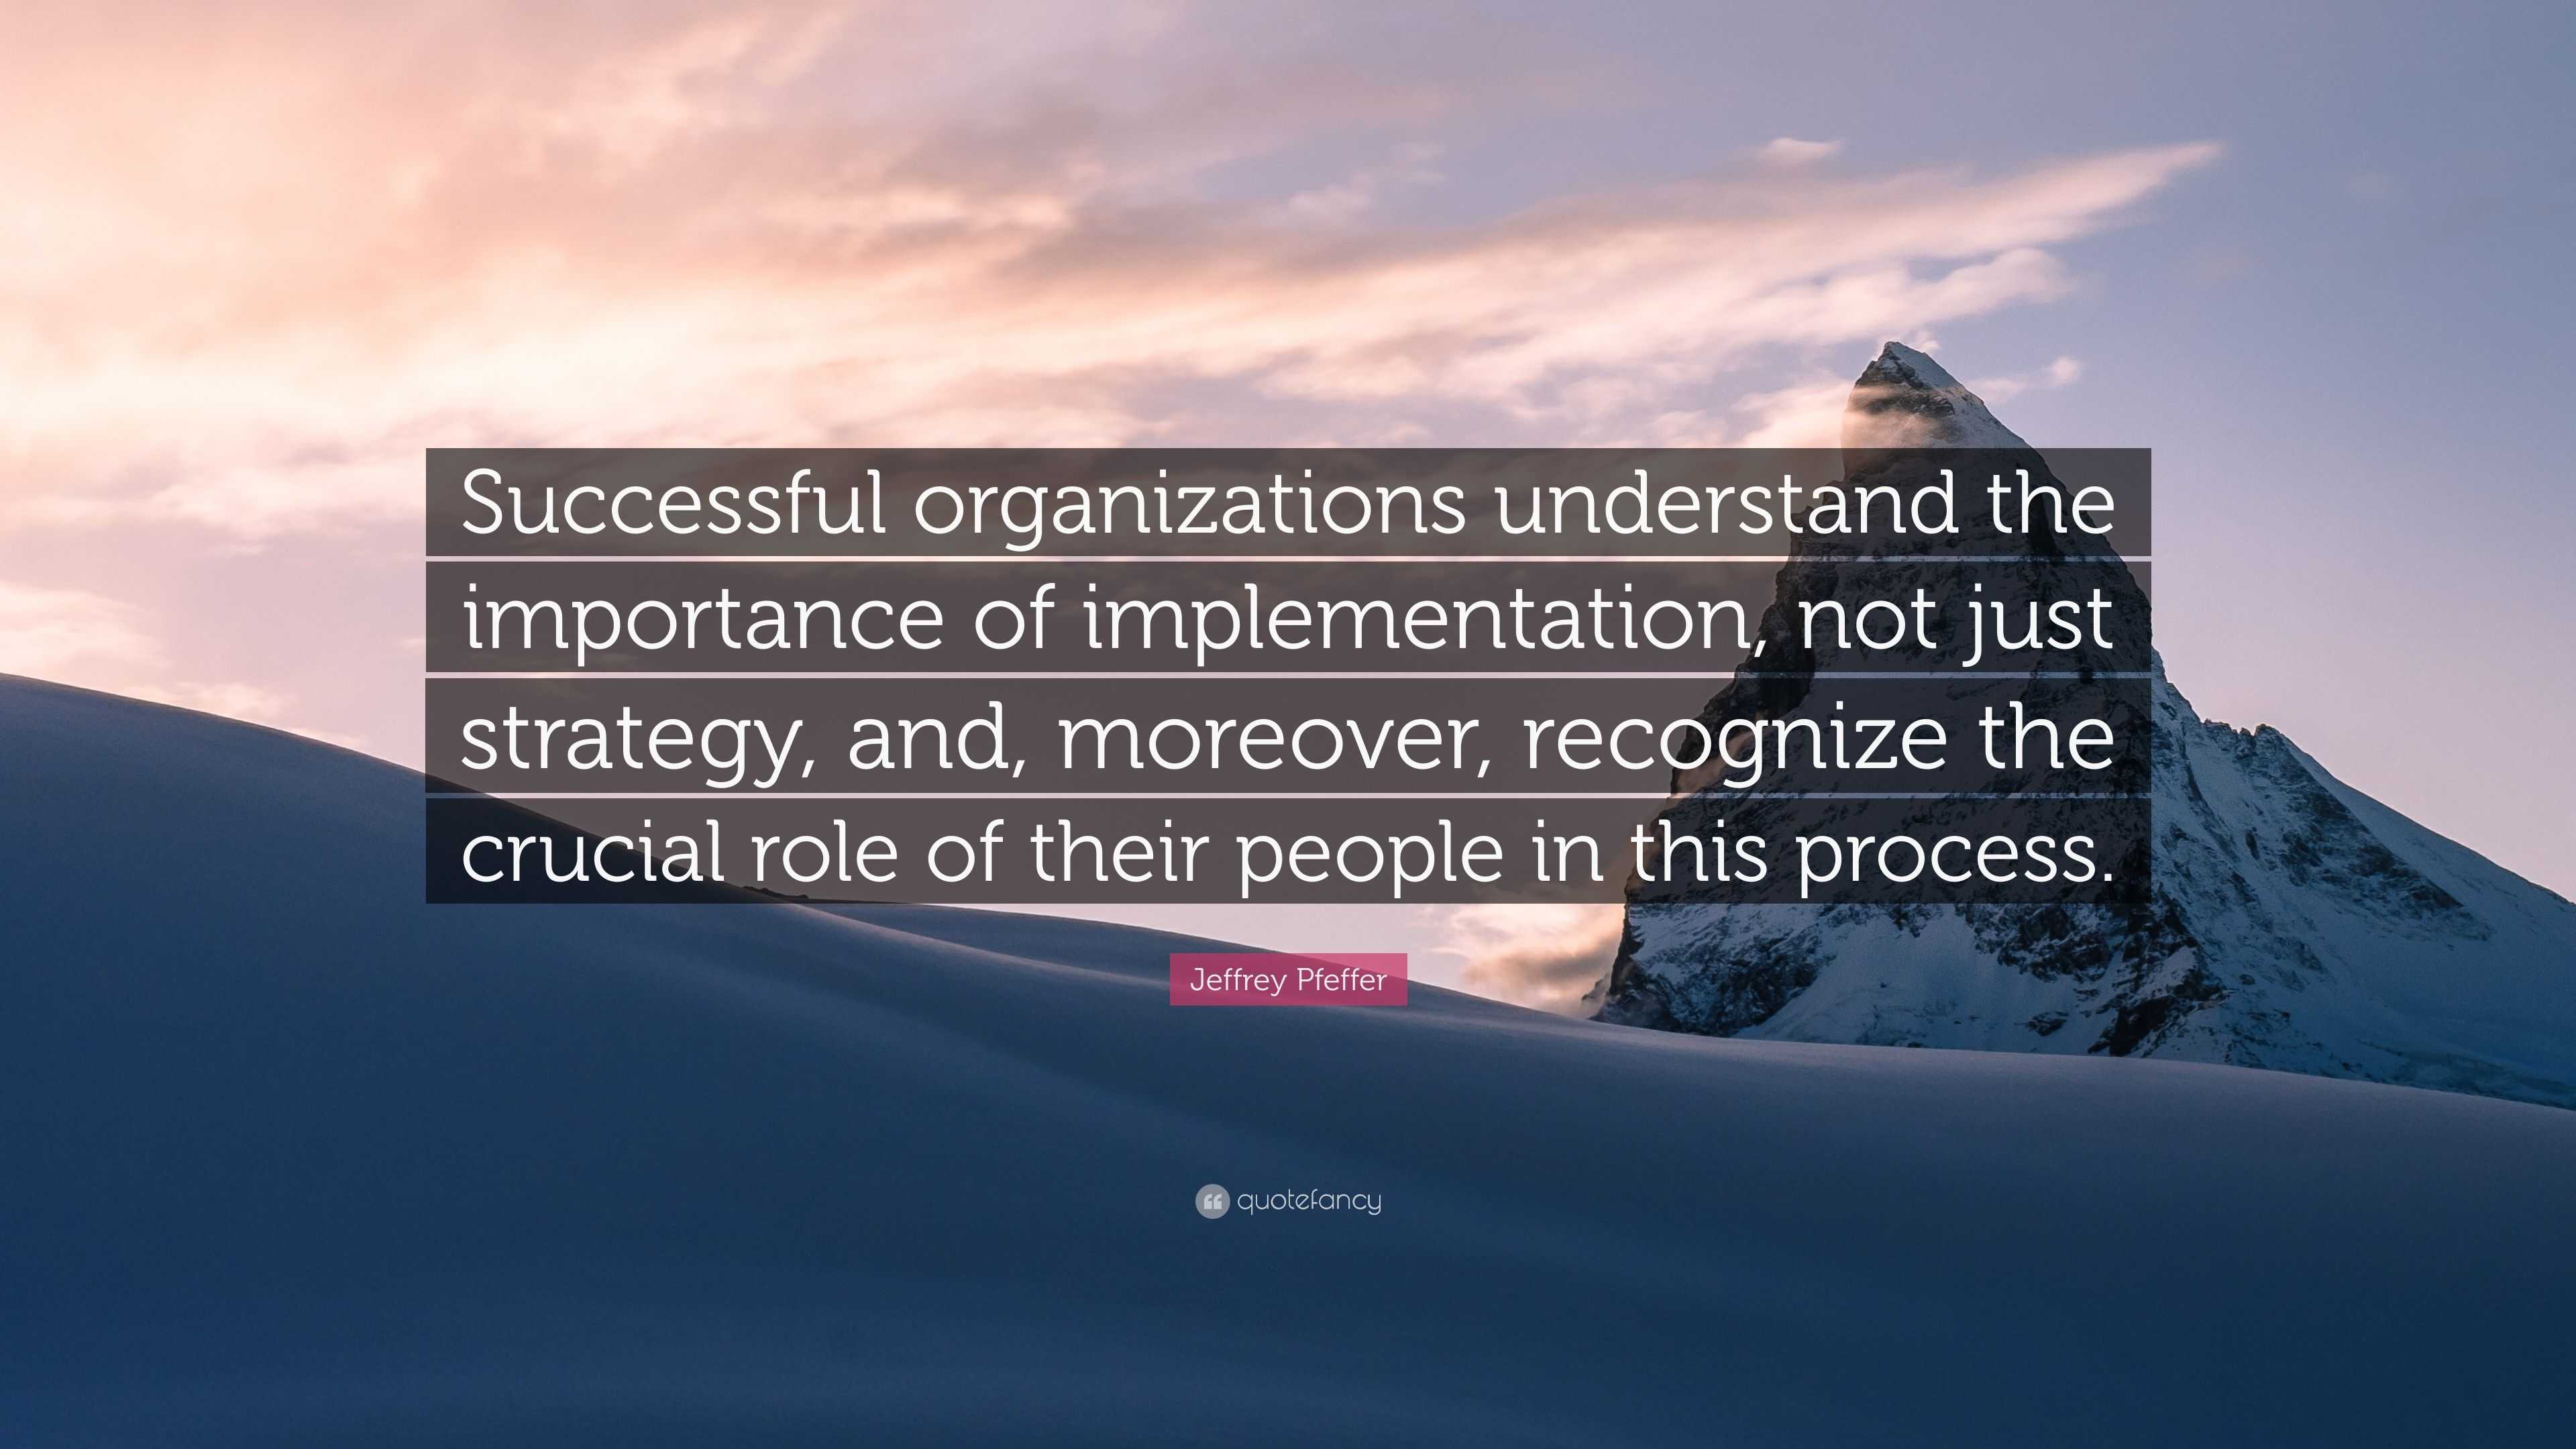 Jeffrey Pfeffer Quote “Successful organizations understand the